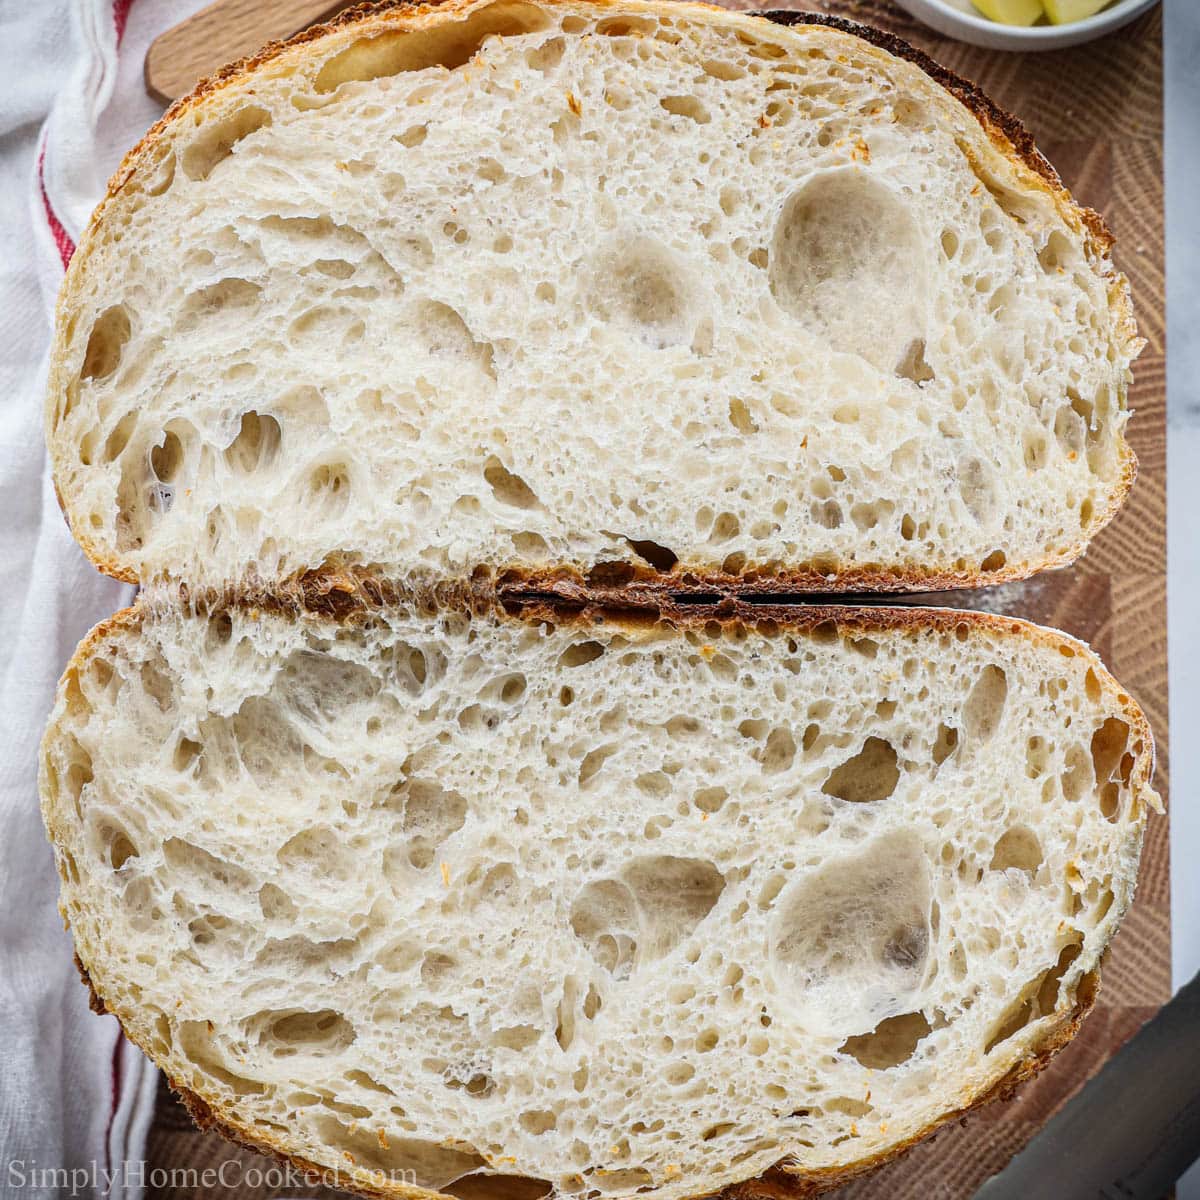 https://simplyhomecooked.com/wp-content/uploads/2022/07/sourdough-bread-recipe-6.jpg